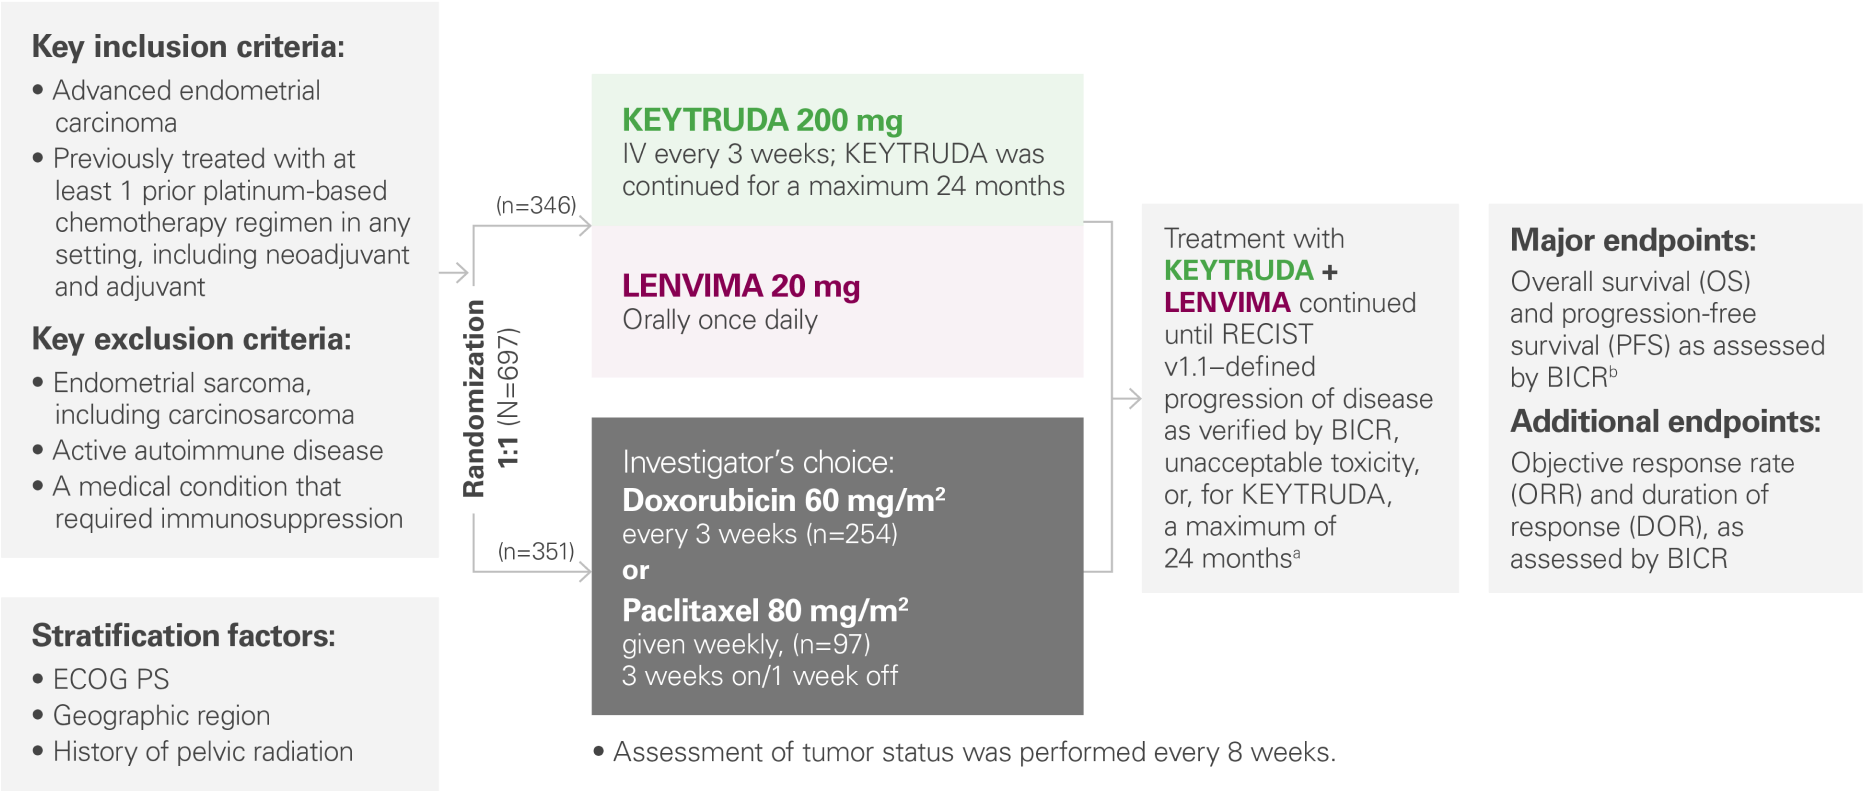 Study Design for KEYNOTE-775/Study 309 Clinical Trial